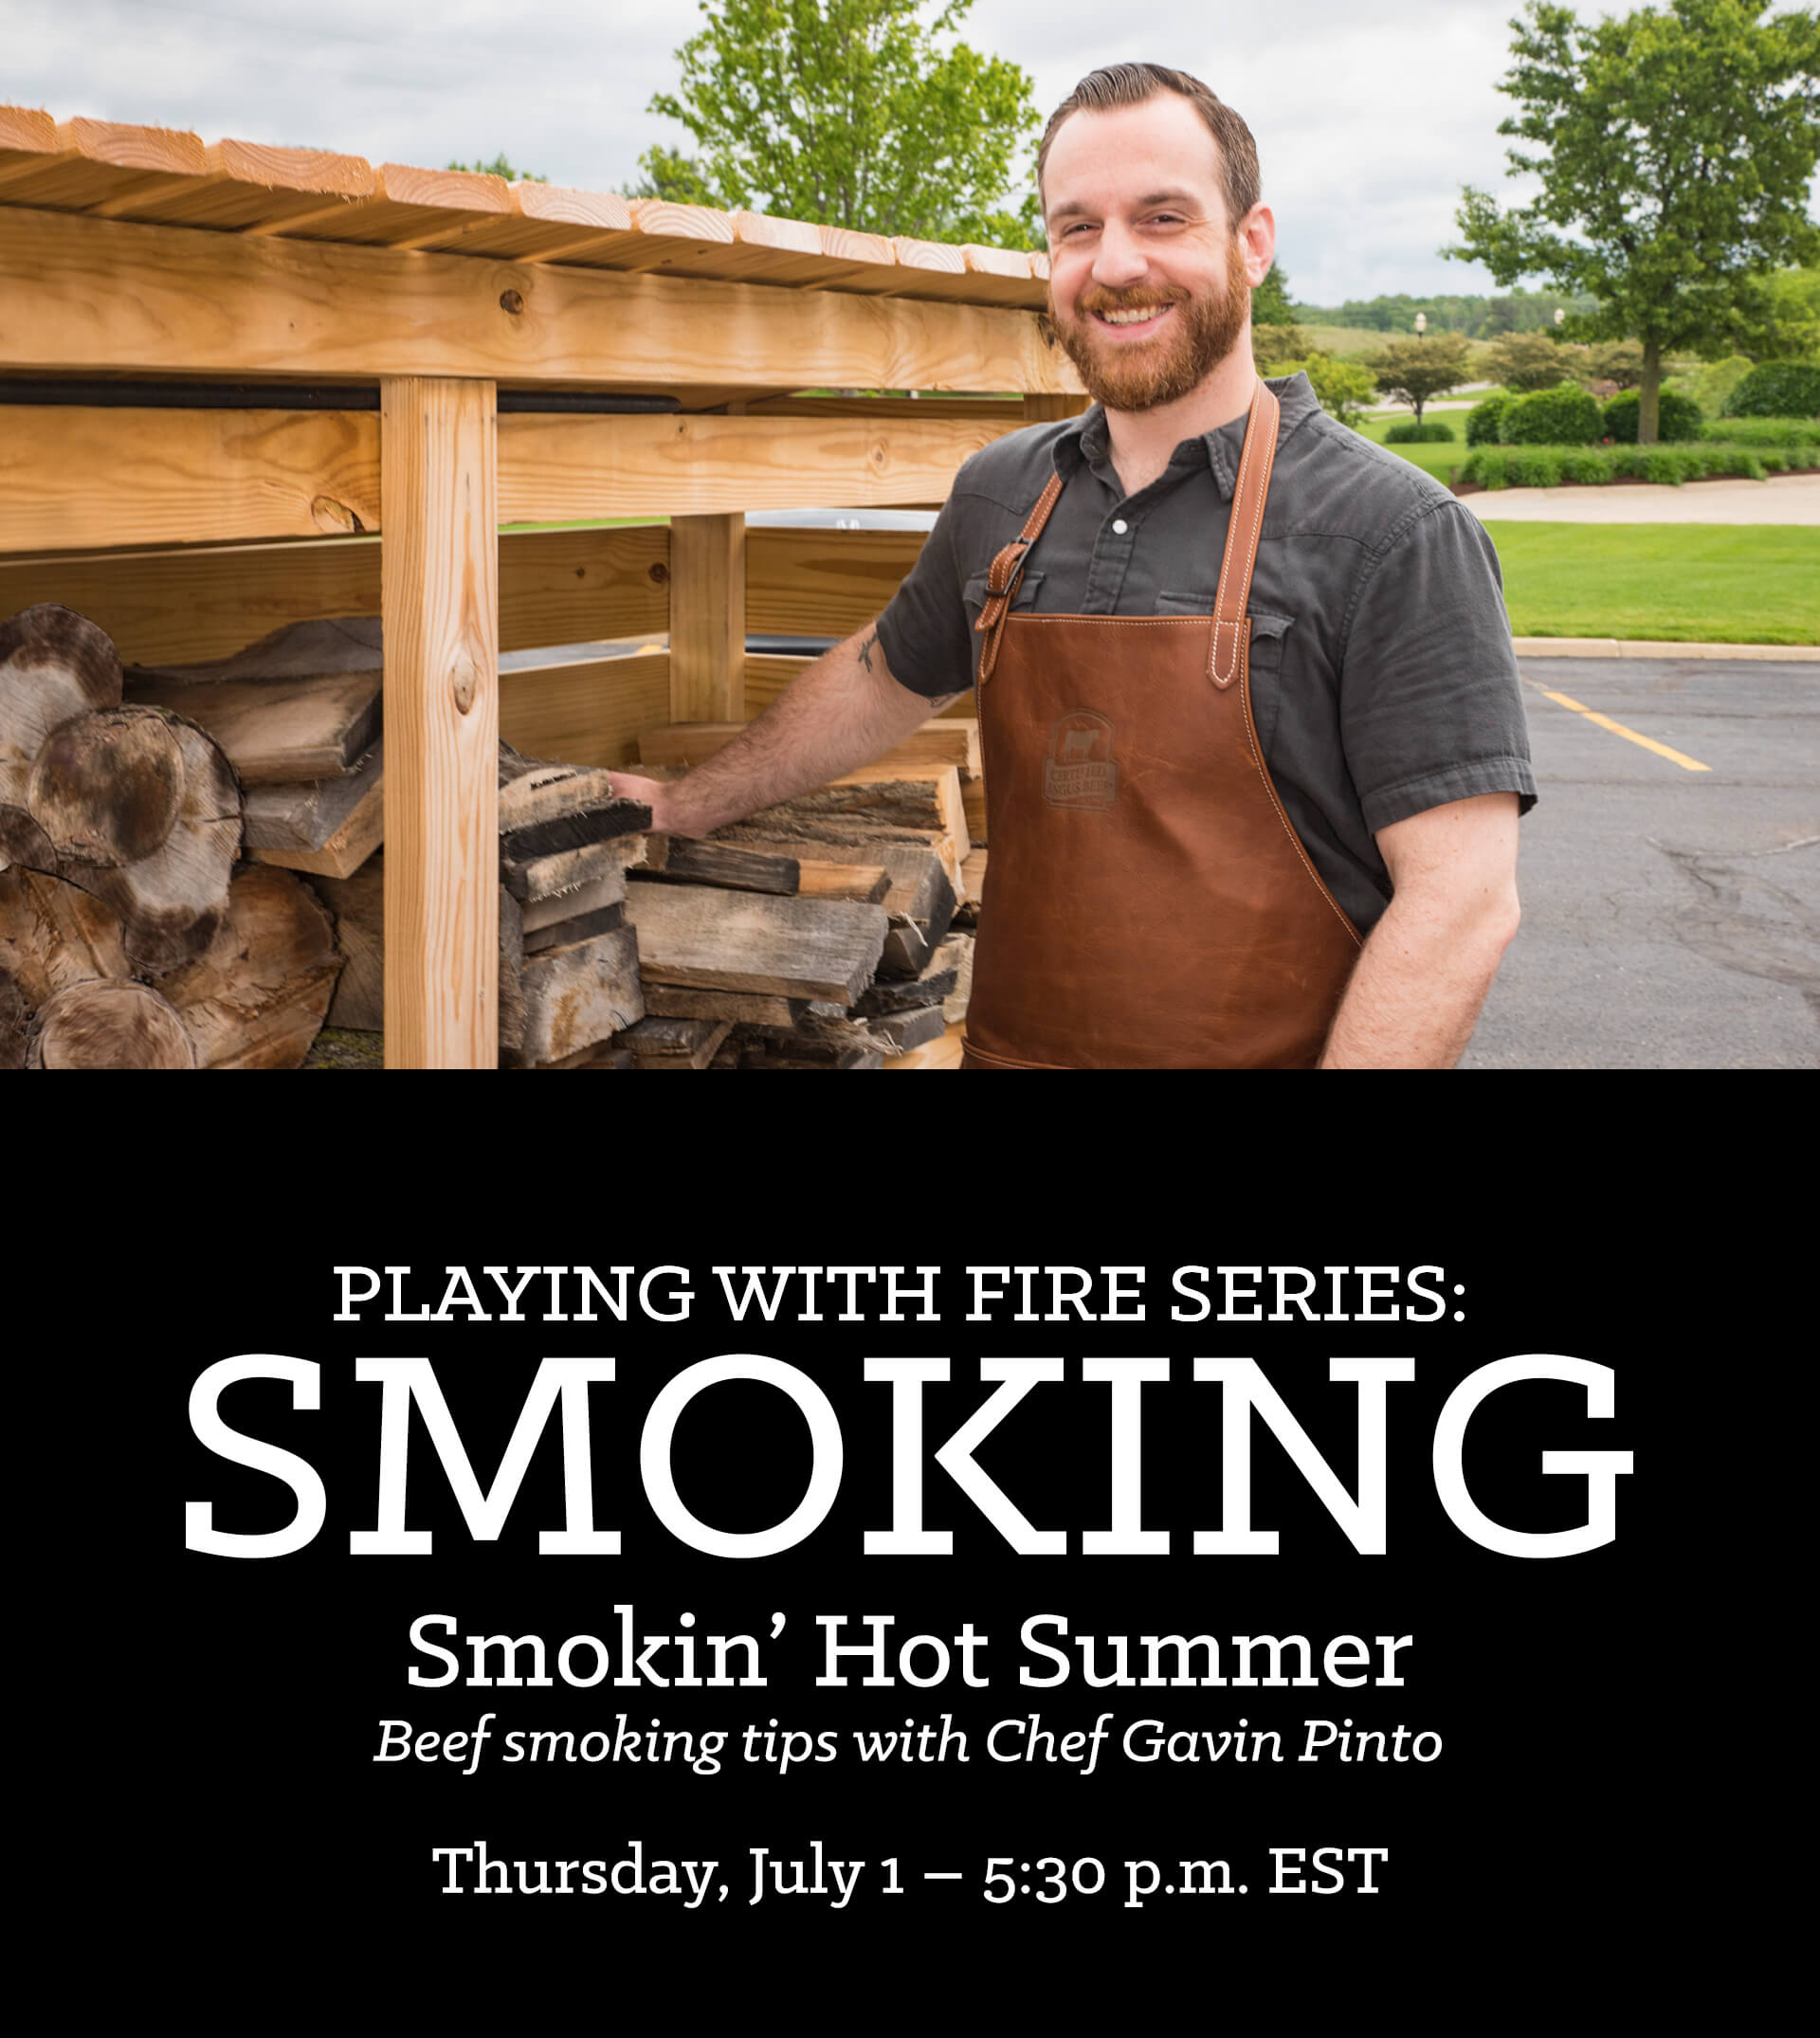 Tame the Flame - Beef smoking tips with Gavin Pinto